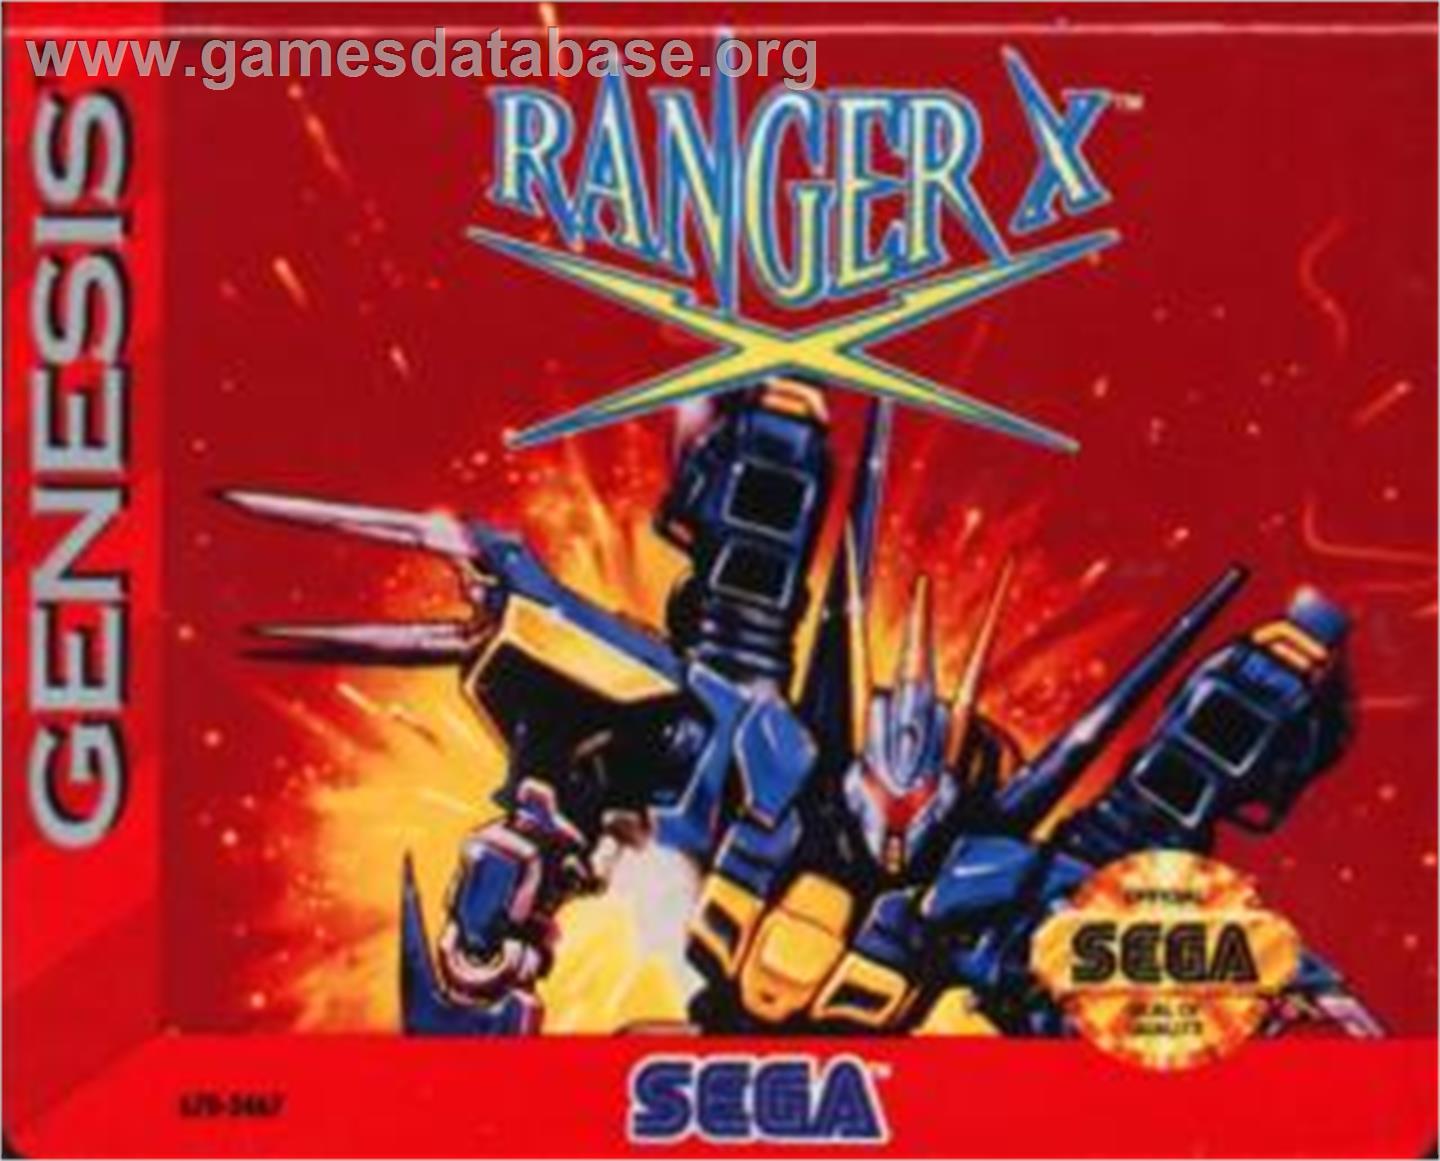 Ranger X - Sega Nomad - Artwork - Cartridge